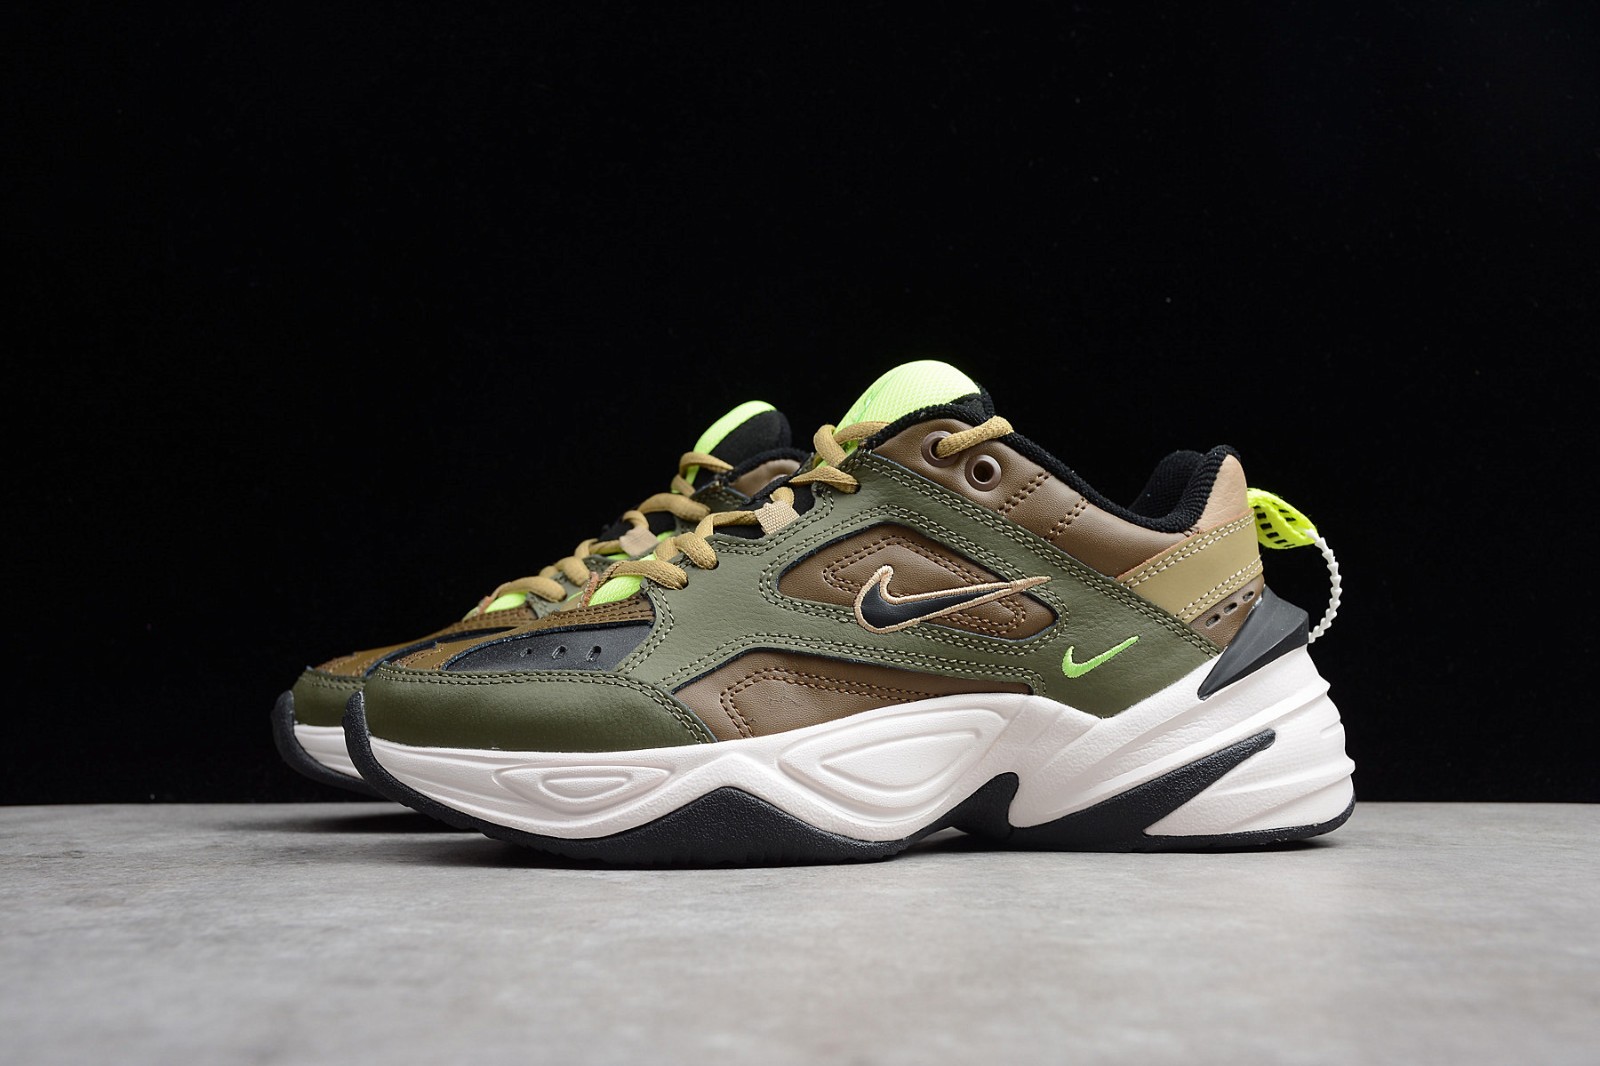 Terugspoelen materiaal Krijger nike lunar brogue shoes - 201 - GmarShops - Nike M2K Tekno Medium Olive  Black Yukon Brown AO3108